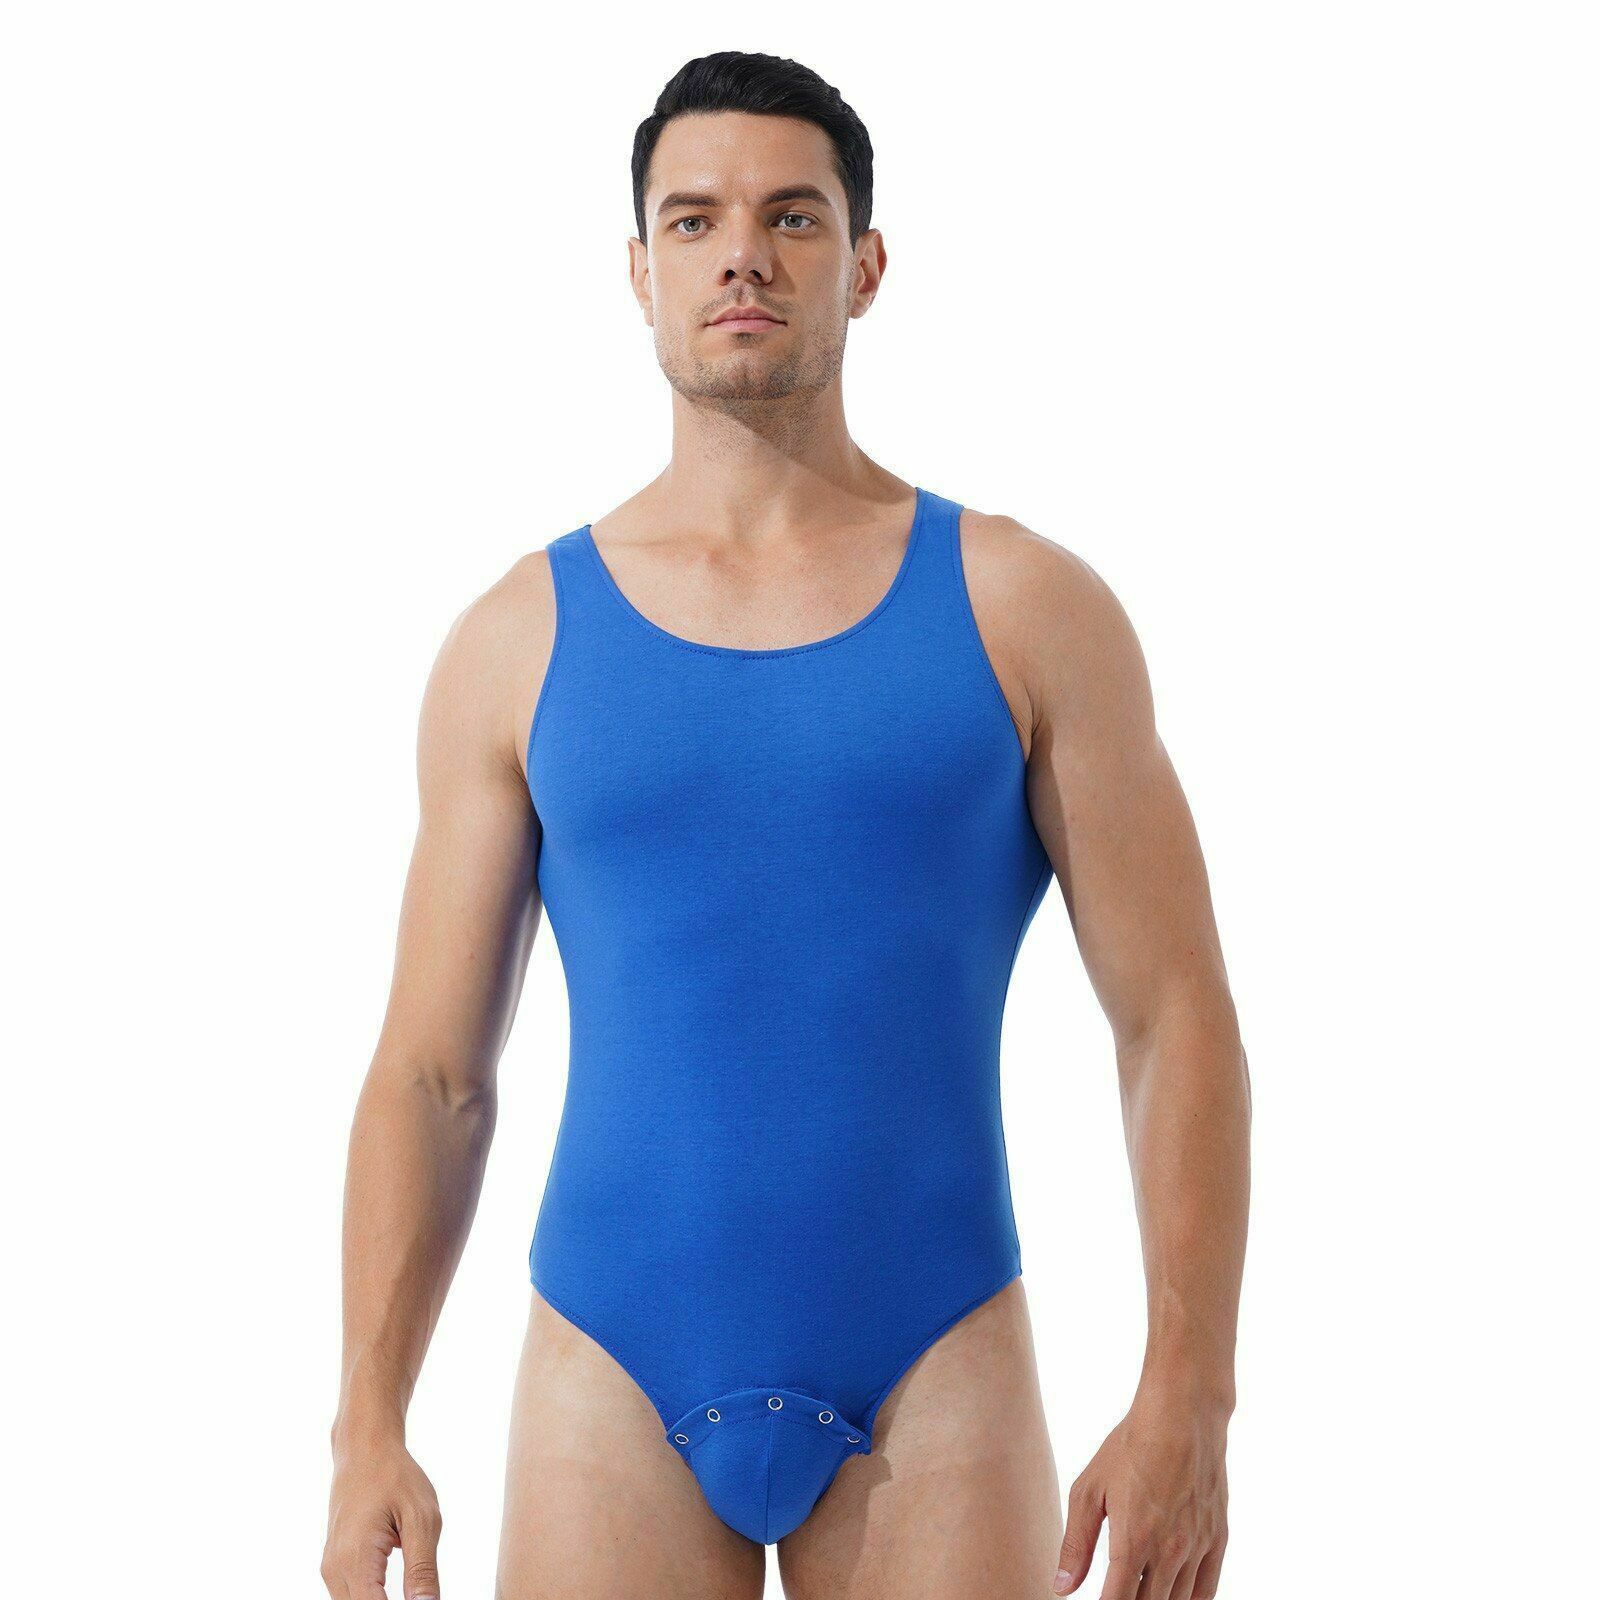 Men's U Neck Bodysuit Sleeveless Jumpsuit for Fitness Workout Gymnastics